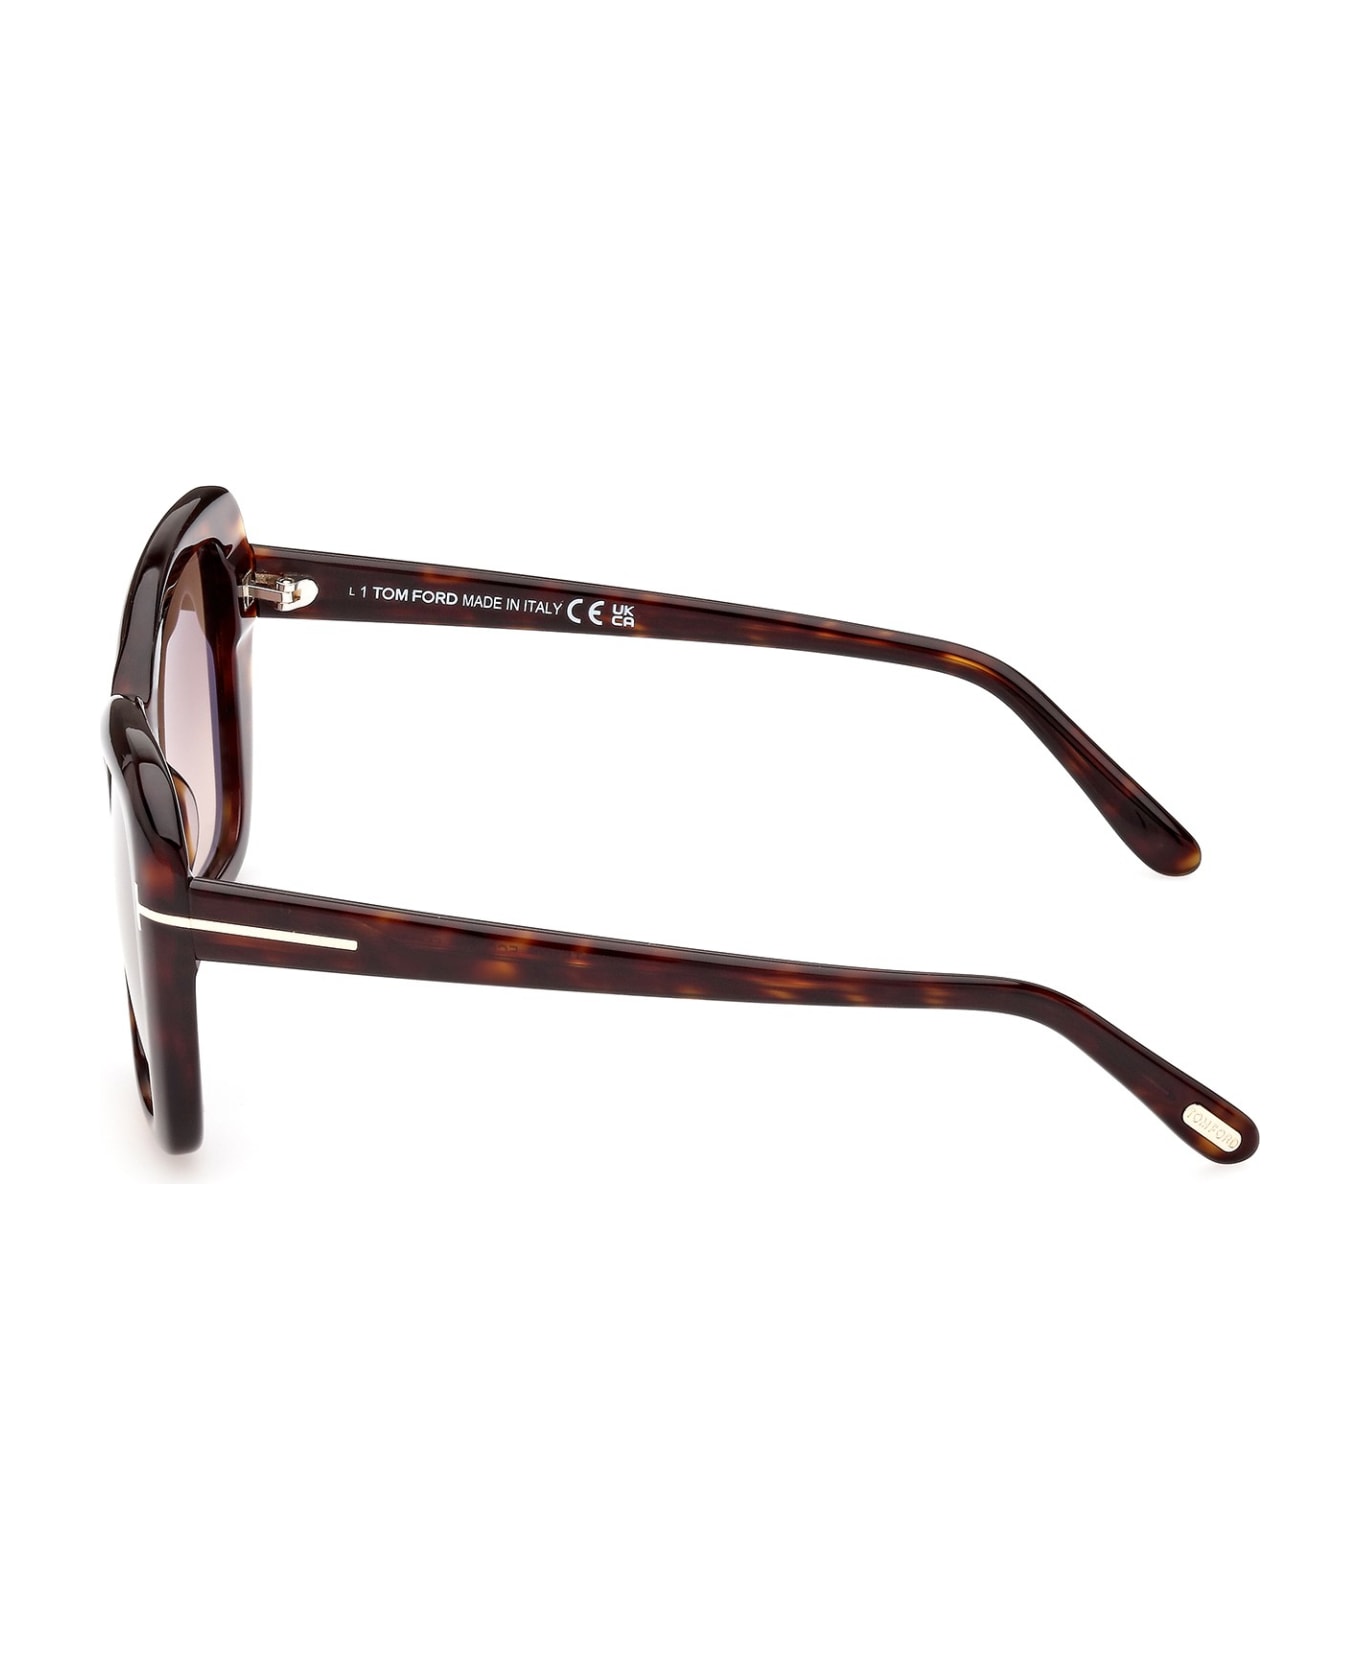 Tom Ford Eyewear Saint Sunglasses - Marrone/Marrone